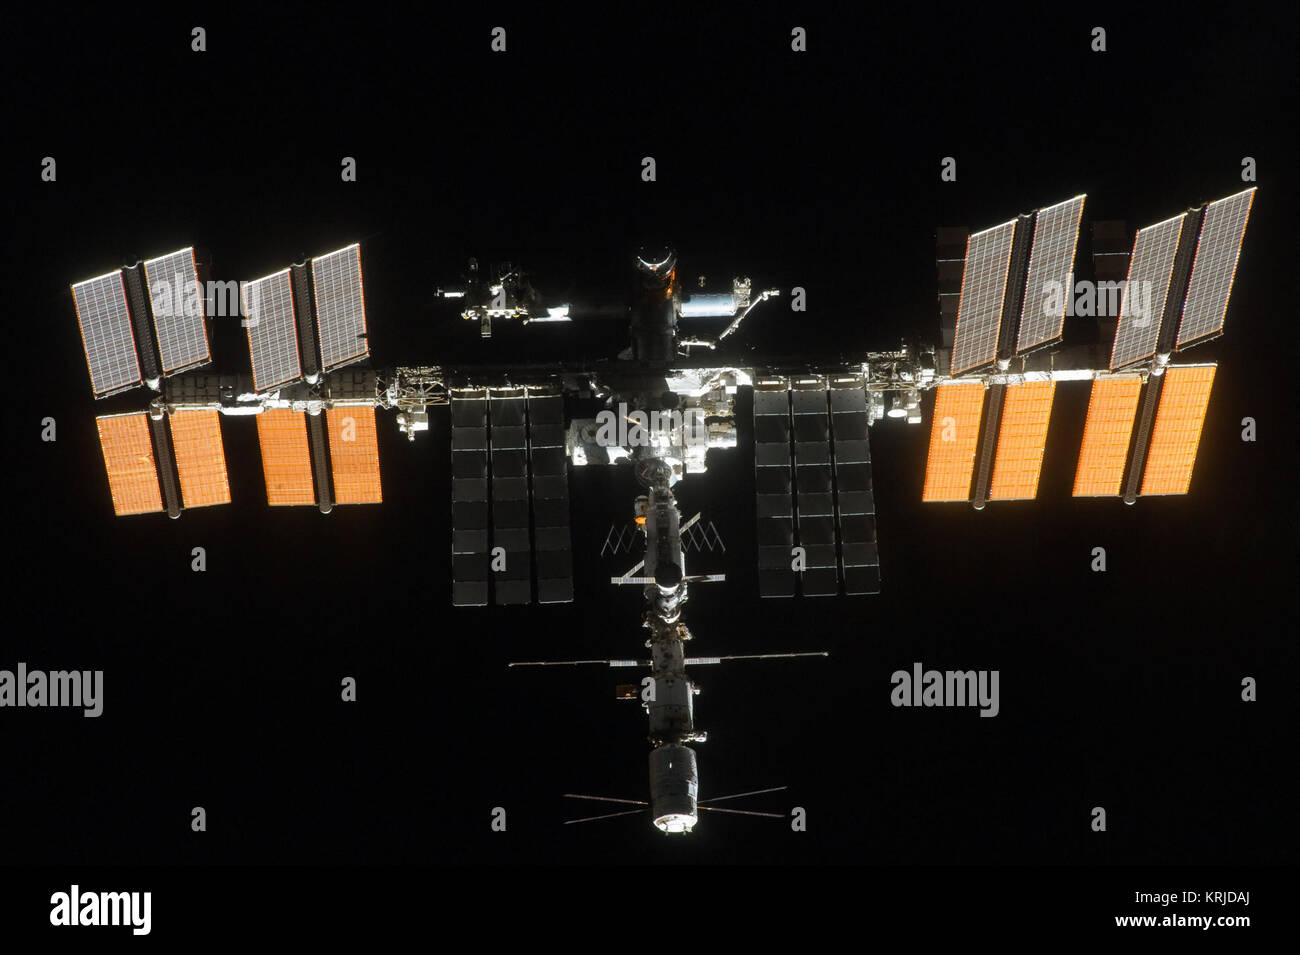 Sts 133 International Space Station After Undocking 8 Stock Photo Alamy